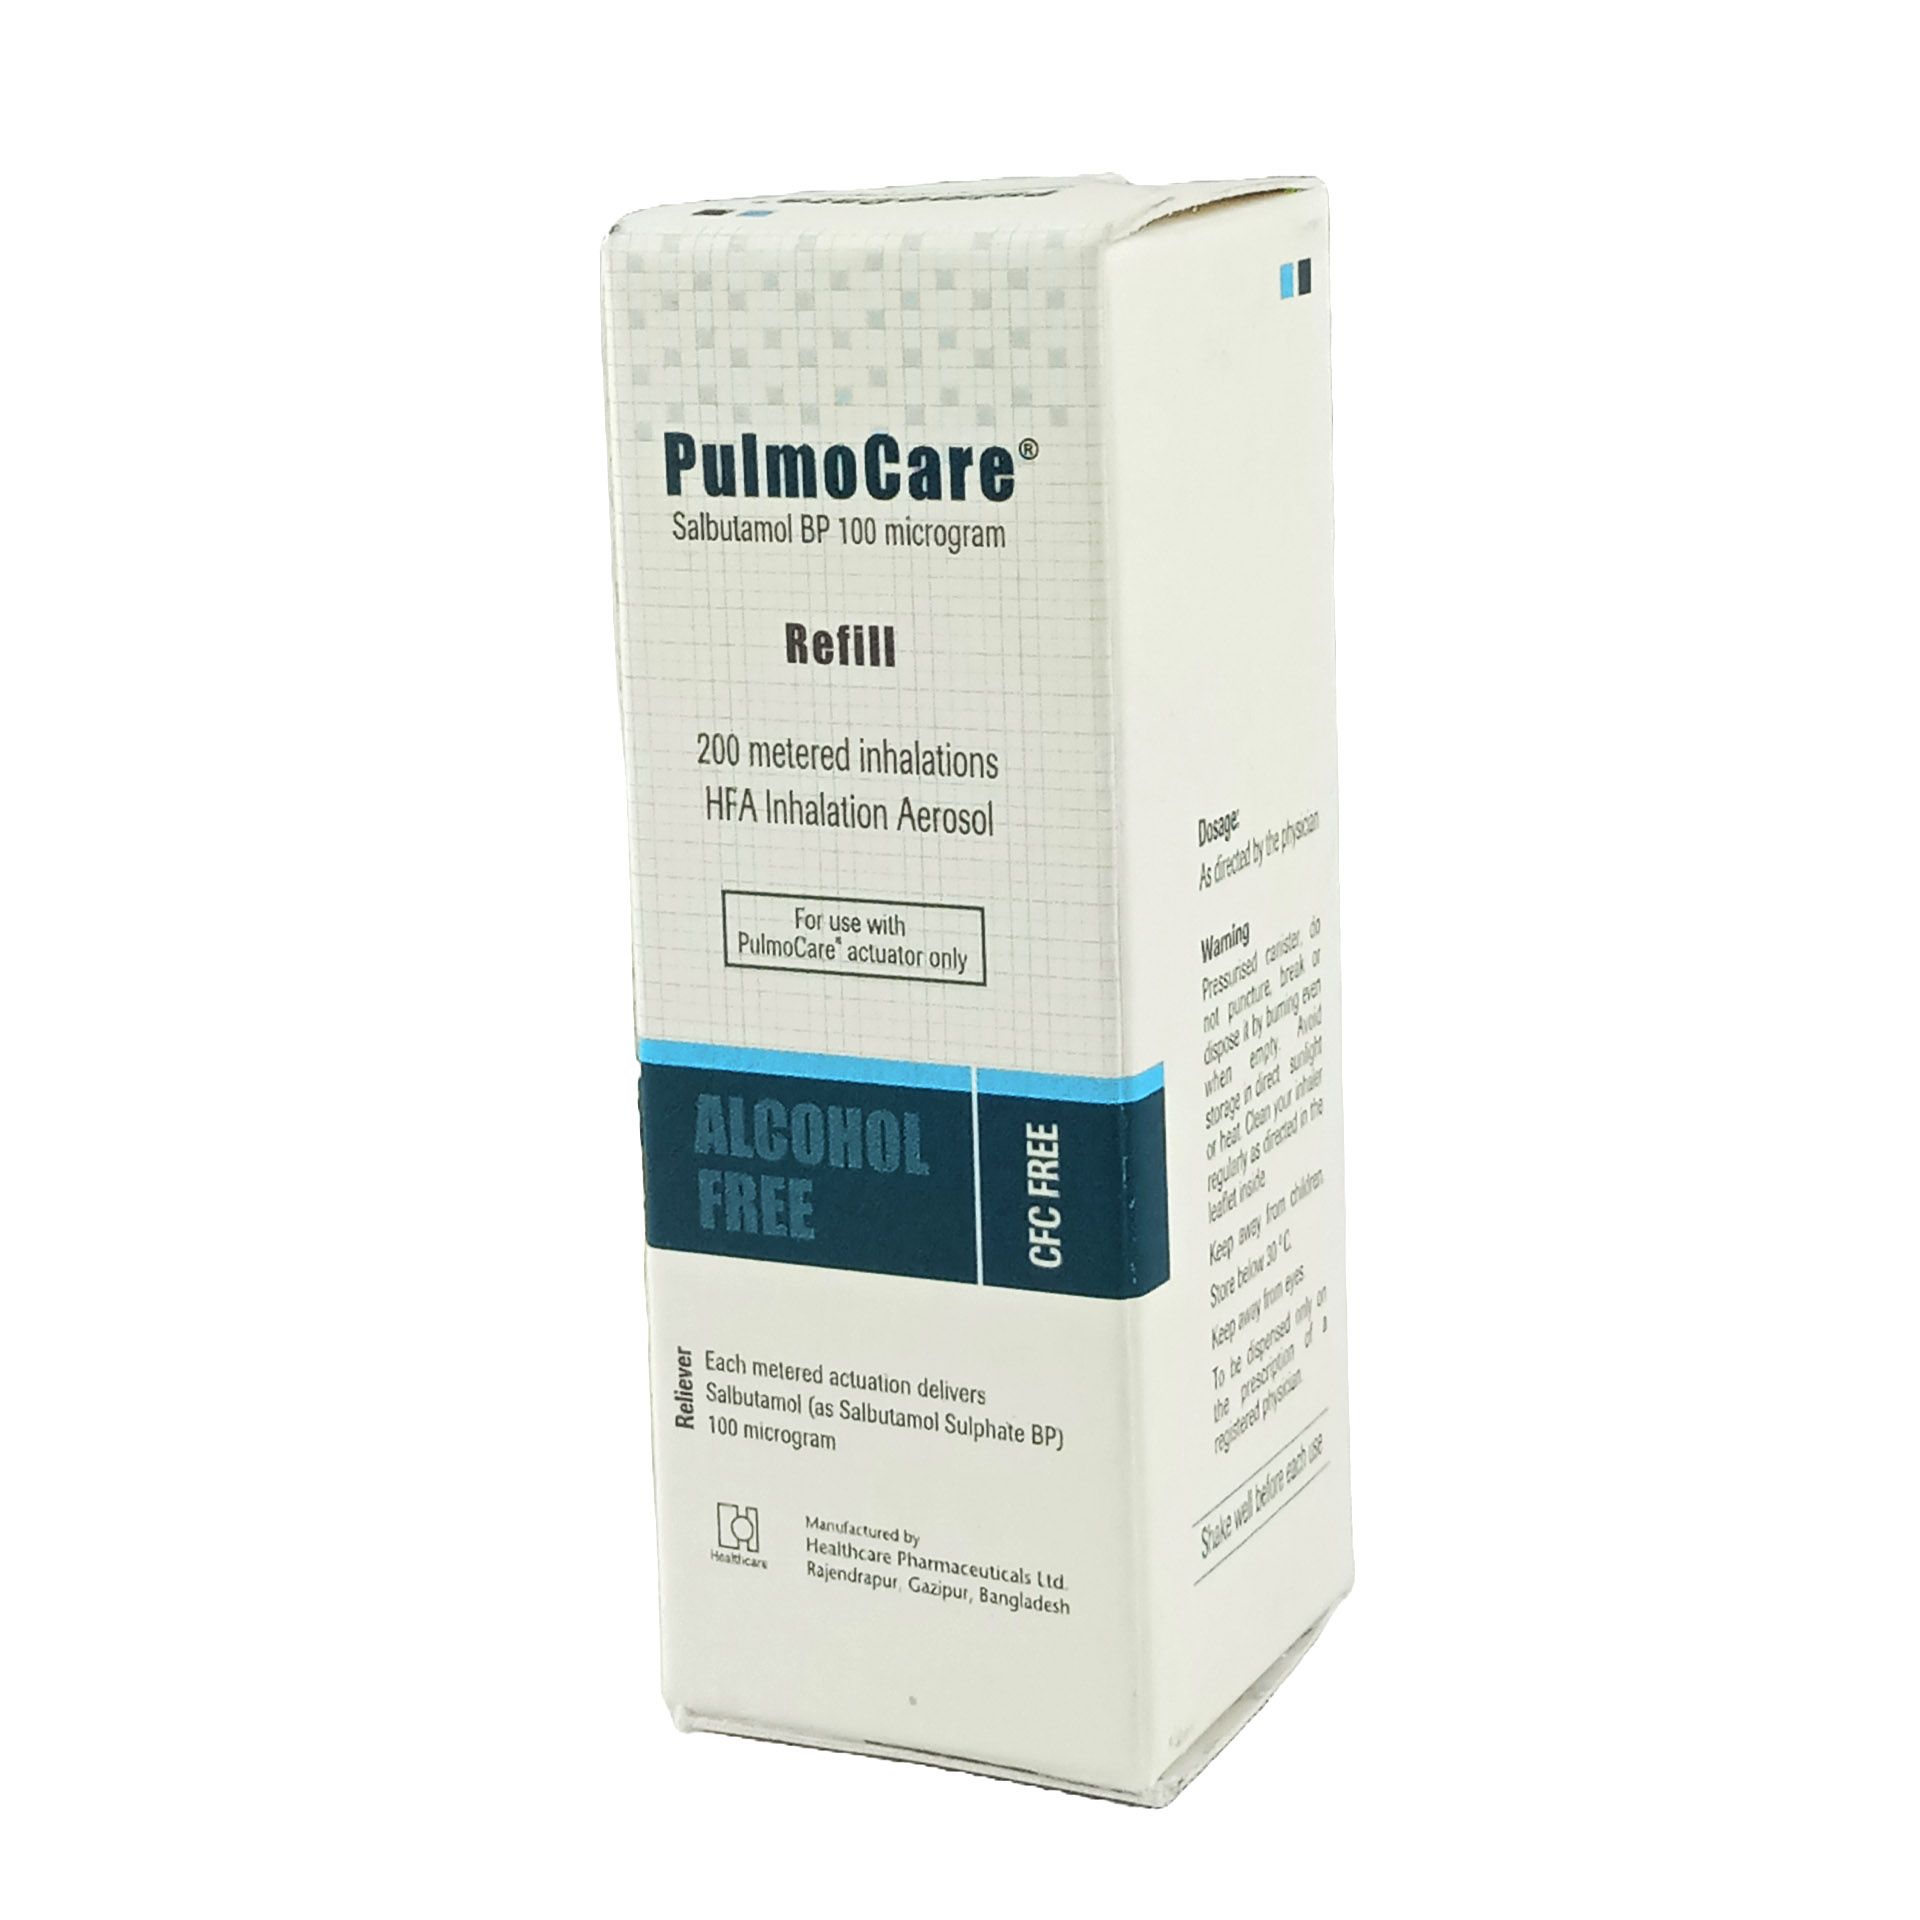 PulmoCare MDI Refill 100mcg/puff inhaler